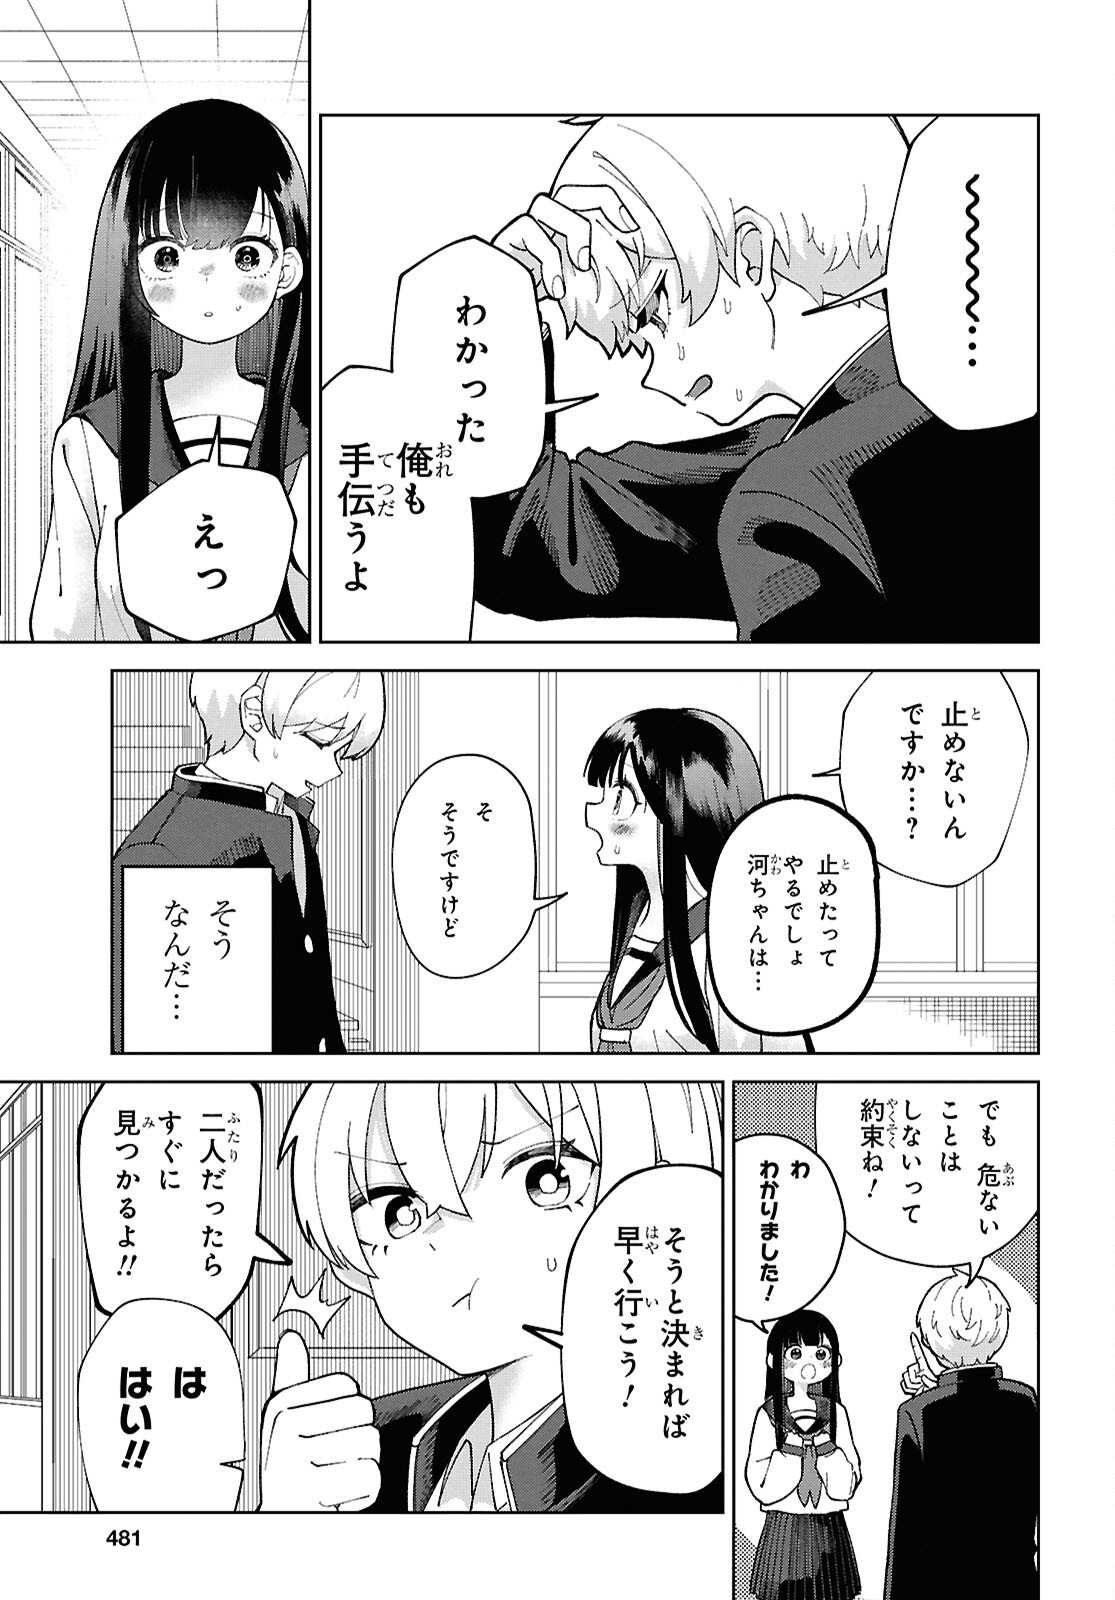 Garuru Girl - Chapter 4 - Page 11